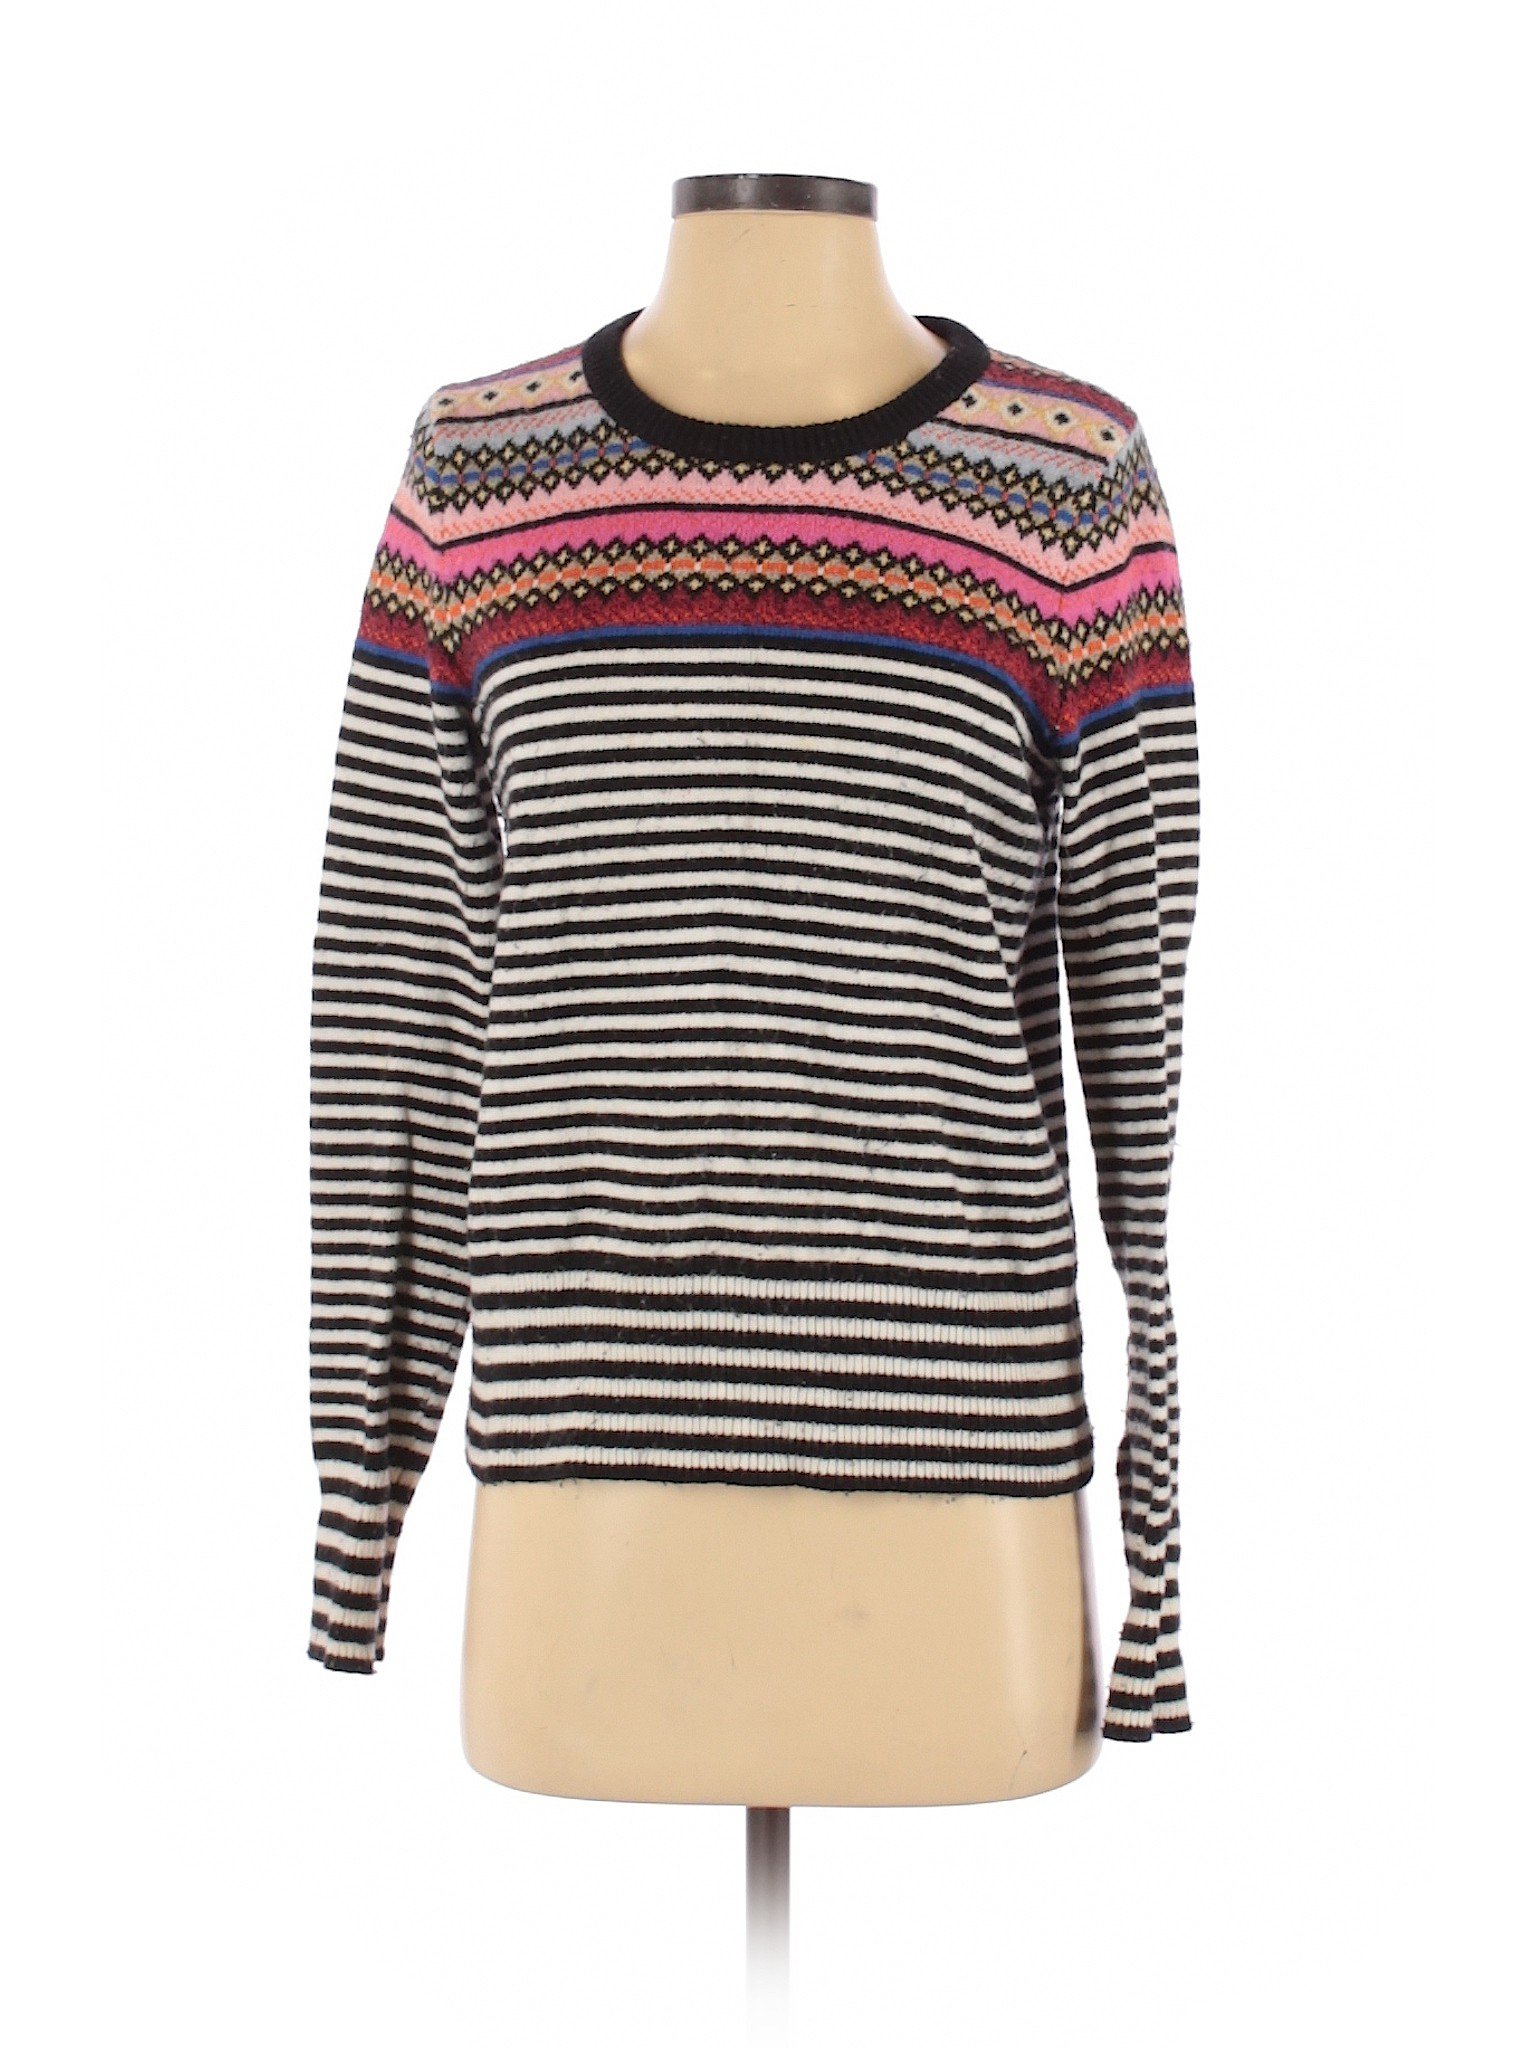 Gap Women Black Pullover Sweater S | eBay